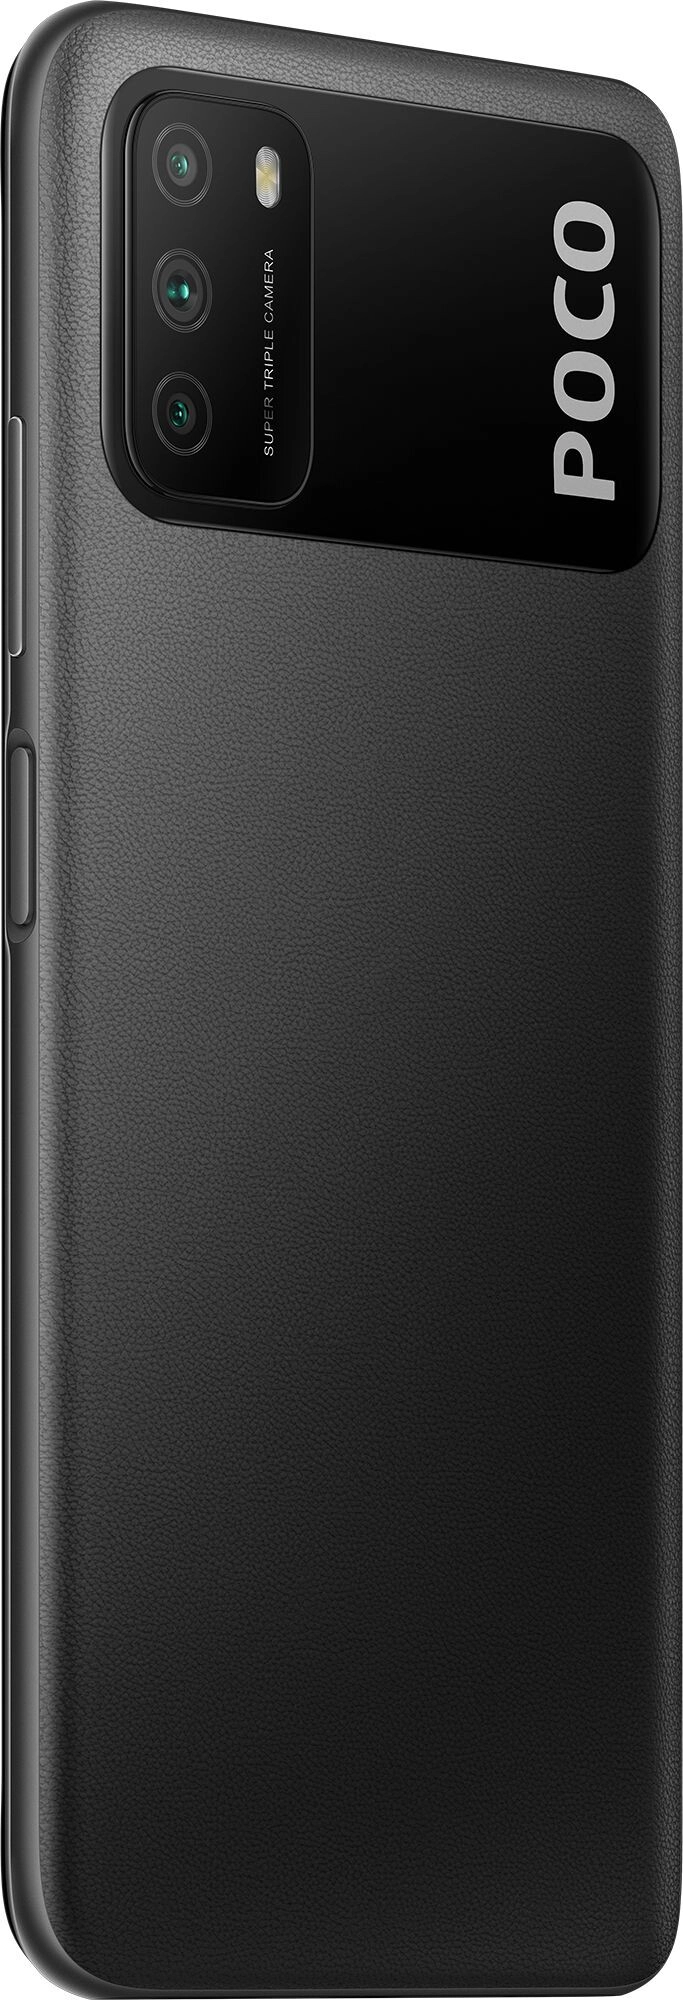 Смартфон Xiaomi Poco M3 4/64Gb Black заказать